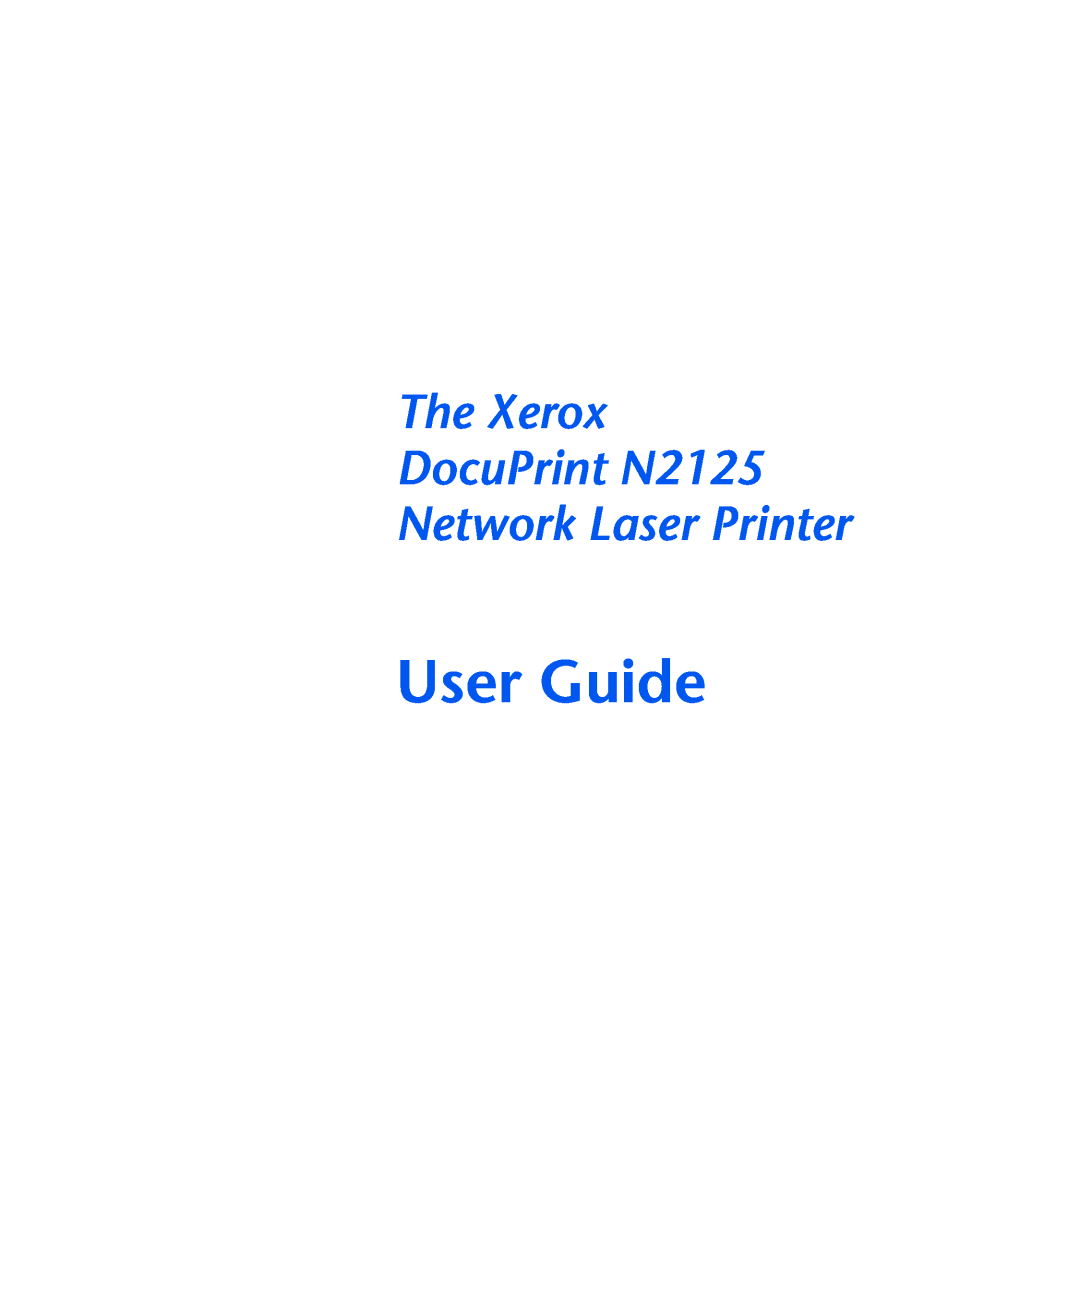 Xerox manual The Xerox DocuPrint N2125 Network Laser Printer, User Guide 